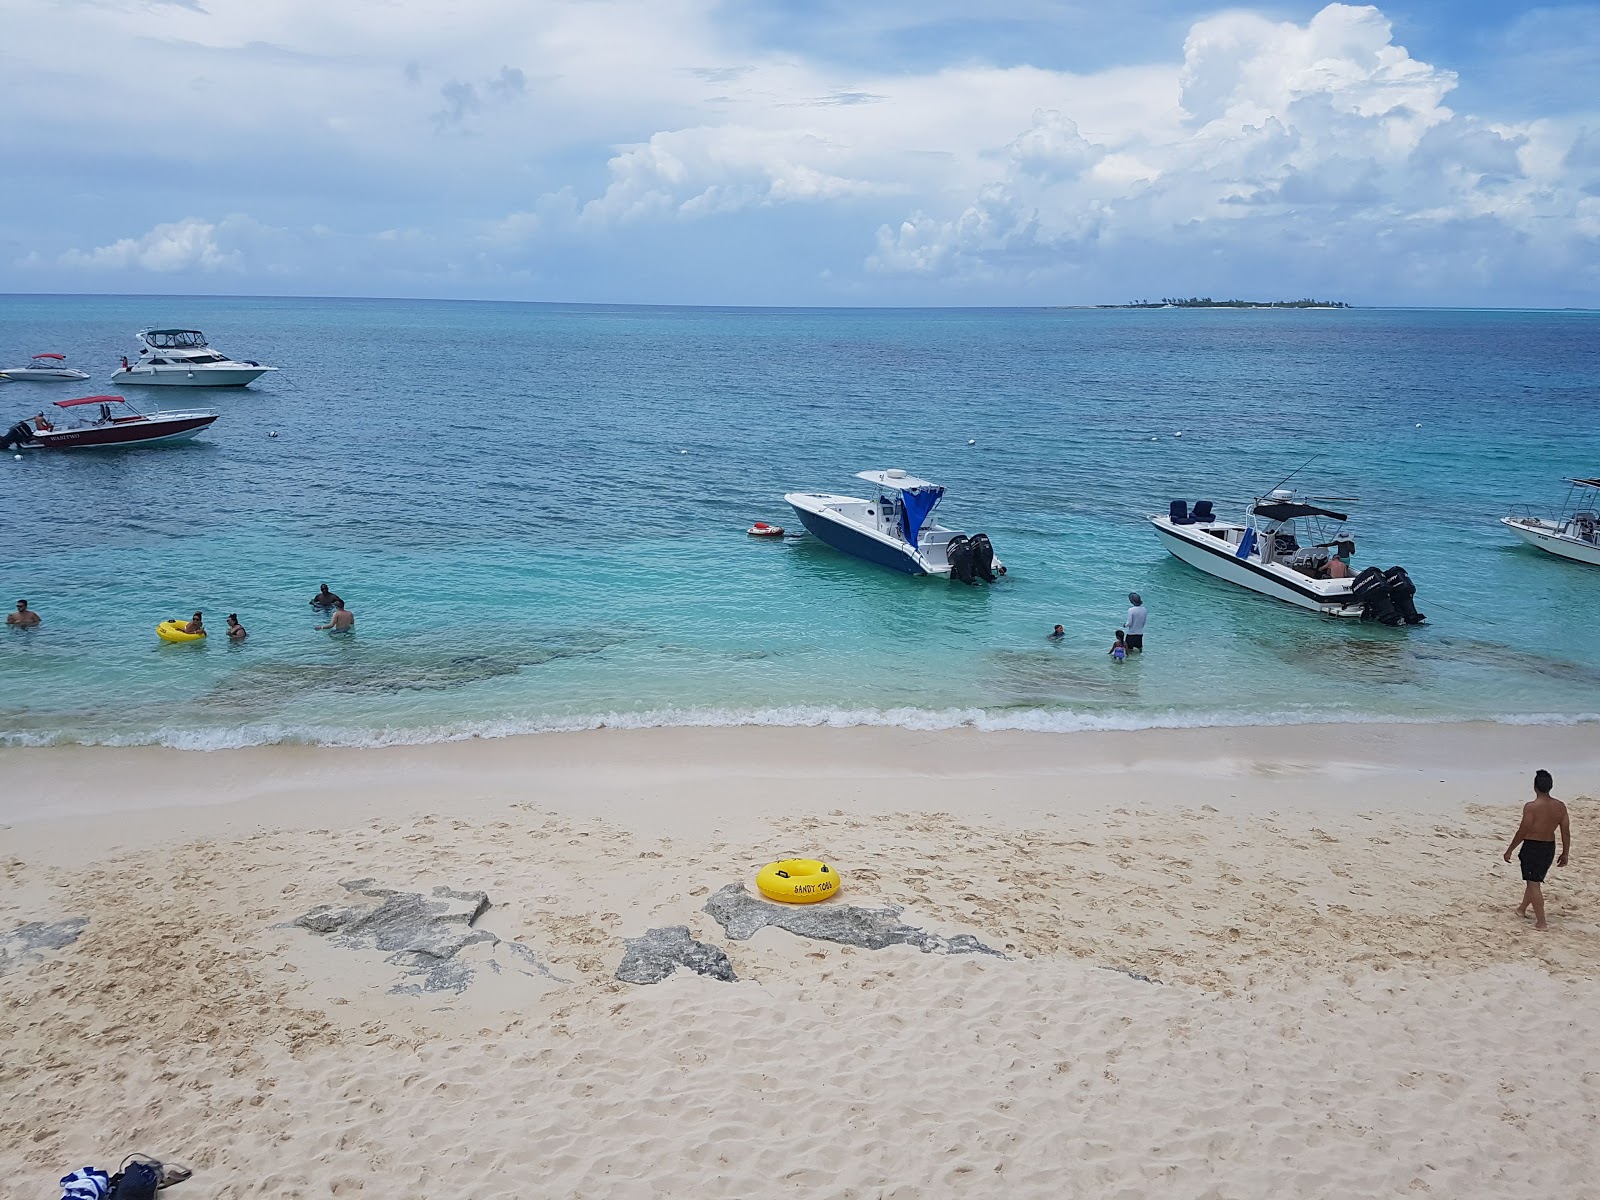 Foto de Sandy Toes beach - lugar popular entre os apreciadores de relaxamento